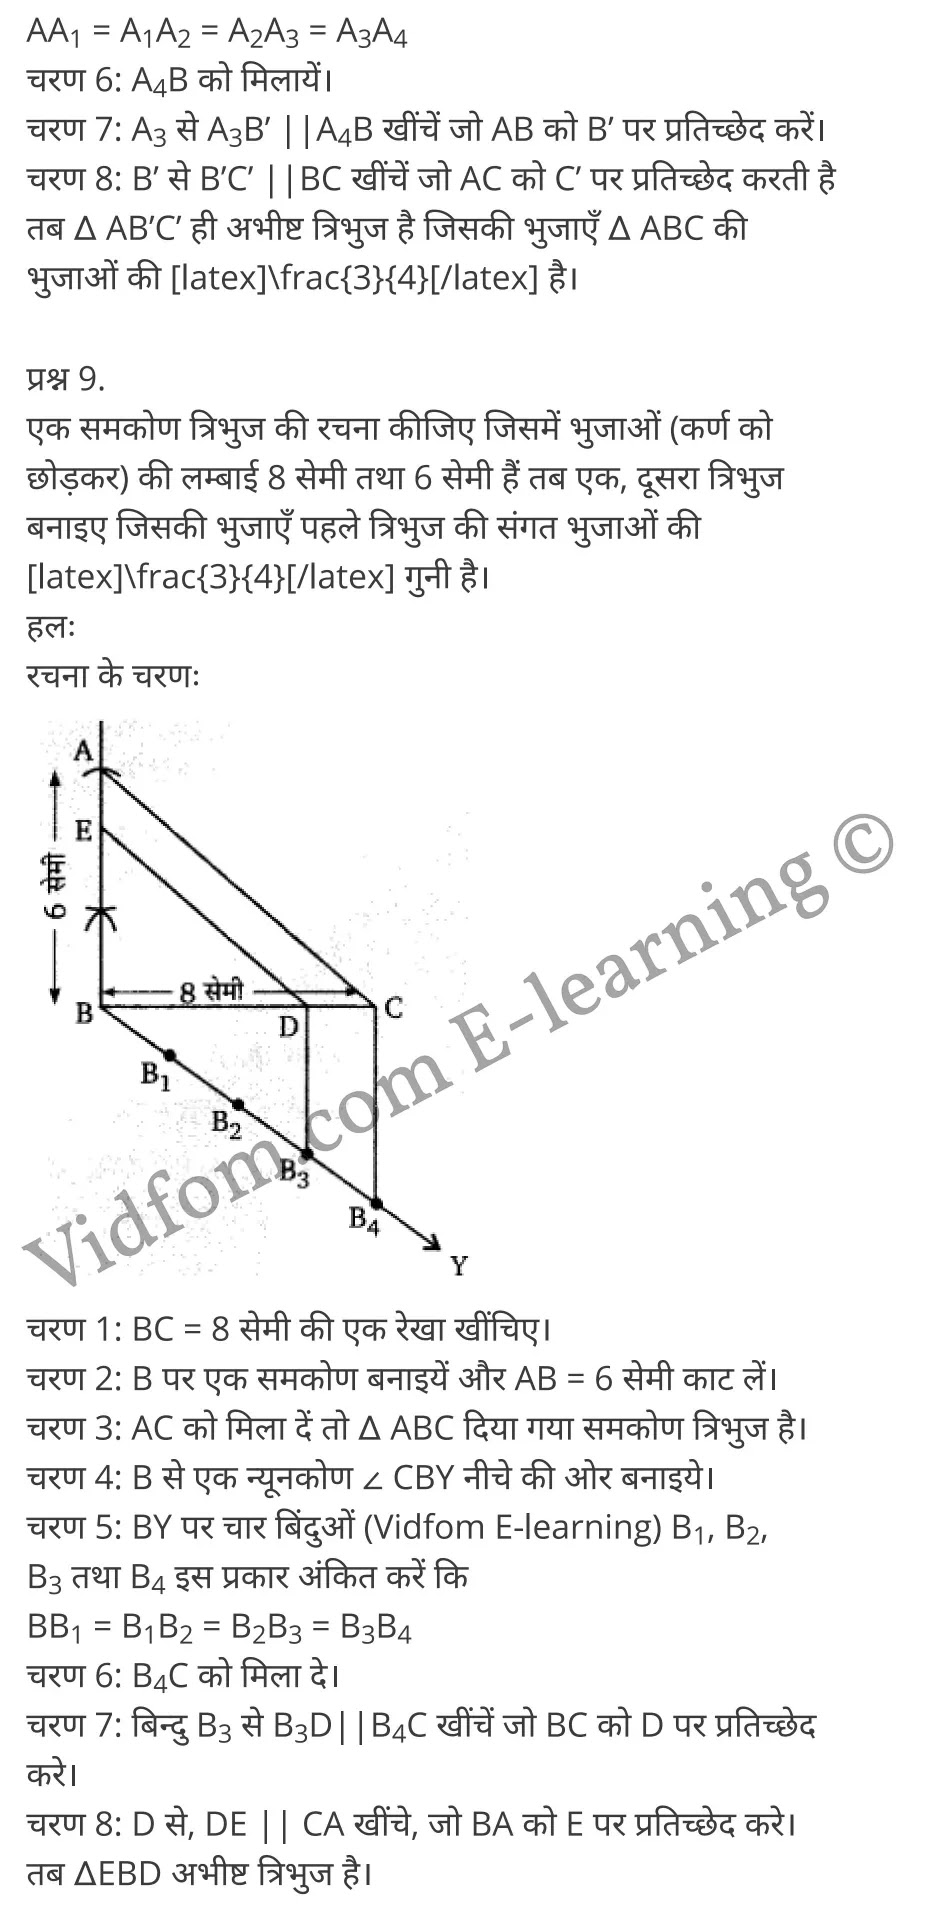 Balaji Maths Book Solutions Class 10 Chapter 9 Constructions (रचनाएँ)  Chapter 9 Constructions Ex 9.1  कक्षा 10 बालाजी गणित  के नोट्स  हिंदी में एनसीईआरटी समाधान,     class 10 Balaji Maths Chapter 9,   class 10 Balaji Maths Chapter 9 ncert solutions in Hindi,   class 10 Balaji Maths Chapter 9 notes in hindi,   class 10 Balaji Maths Chapter 9 question answer,   class 10 Balaji Maths Chapter 9 notes,   class 10 Balaji Maths Chapter 9 class 10 Balaji Maths Chapter 9 in  hindi,    class 10 Balaji Maths Chapter 9 important questions in  hindi,   class 10 Balaji Maths Chapter 9 notes in hindi,    class 10 Balaji Maths Chapter 9 test,   class 10 Balaji Maths Chapter 9 pdf,   class 10 Balaji Maths Chapter 9 notes pdf,   class 10 Balaji Maths Chapter 9 exercise solutions,   class 10 Balaji Maths Chapter 9 notes study rankers,   class 10 Balaji Maths Chapter 9 notes,    class 10 Balaji Maths Chapter 9  class 10  notes pdf,   class 10 Balaji Maths Chapter 9 class 10  notes  ncert,   class 10 Balaji Maths Chapter 9 class 10 pdf,   class 10 Balaji Maths Chapter 9  book,   class 10 Balaji Maths Chapter 9 quiz class 10  ,    10  th class 10 Balaji Maths Chapter 9  book up board,   up board 10  th class 10 Balaji Maths Chapter 9 notes,  class 10 Balaji Maths,   class 10 Balaji Maths ncert solutions in Hindi,   class 10 Balaji Maths notes in hindi,   class 10 Balaji Maths question answer,   class 10 Balaji Maths notes,  class 10 Balaji Maths class 10 Balaji Maths Chapter 9 in  hindi,    class 10 Balaji Maths important questions in  hindi,   class 10 Balaji Maths notes in hindi,    class 10 Balaji Maths test,  class 10 Balaji Maths class 10 Balaji Maths Chapter 9 pdf,   class 10 Balaji Maths notes pdf,   class 10 Balaji Maths exercise solutions,   class 10 Balaji Maths,  class 10 Balaji Maths notes study rankers,   class 10 Balaji Maths notes,  class 10 Balaji Maths notes,   class 10 Balaji Maths  class 10  notes pdf,   class 10 Balaji Maths class 10  notes  ncert,   class 10 Balaji Maths class 10 pdf,   class 10 Balaji Maths  book,  class 10 Balaji Maths quiz class 10  ,  10  th class 10 Balaji Maths    book up board,    up board 10  th class 10 Balaji Maths notes,      कक्षा 10 बालाजी गणित अध्याय 9 ,  कक्षा 10 बालाजी गणित, कक्षा 10 बालाजी गणित अध्याय 9  के नोट्स हिंदी में,  कक्षा 10 का हिंदी अध्याय 9 का प्रश्न उत्तर,  कक्षा 10 बालाजी गणित अध्याय 9  के नोट्स,  10 कक्षा बालाजी गणित  हिंदी में, कक्षा 10 बालाजी गणित अध्याय 9  हिंदी में,  कक्षा 10 बालाजी गणित अध्याय 9  महत्वपूर्ण प्रश्न हिंदी में, कक्षा 10   हिंदी के नोट्स  हिंदी में, बालाजी गणित हिंदी में  कक्षा 10 नोट्स pdf,    बालाजी गणित हिंदी में  कक्षा 10 नोट्स 2021 ncert,   बालाजी गणित हिंदी  कक्षा 10 pdf,   बालाजी गणित हिंदी में  पुस्तक,   बालाजी गणित हिंदी में की बुक,   बालाजी गणित हिंदी में  प्रश्नोत्तरी class 10 ,  बिहार बोर्ड 10  पुस्तक वीं हिंदी नोट्स,    बालाजी गणित कक्षा 10 नोट्स 2021 ncert,   बालाजी गणित  कक्षा 10 pdf,   बालाजी गणित  पुस्तक,   बालाजी गणित  प्रश्नोत्तरी class 10, कक्षा 10 बालाजी गणित,  कक्षा 10 बालाजी गणित  के नोट्स हिंदी में,  कक्षा 10 का हिंदी का प्रश्न उत्तर,  कक्षा 10 बालाजी गणित  के नोट्स,  10 कक्षा हिंदी 2021  हिंदी में, कक्षा 10 बालाजी गणित  हिंदी में,  कक्षा 10 बालाजी गणित  महत्वपूर्ण प्रश्न हिंदी में, कक्षा 10 बालाजी गणित  नोट्स  हिंदी में,